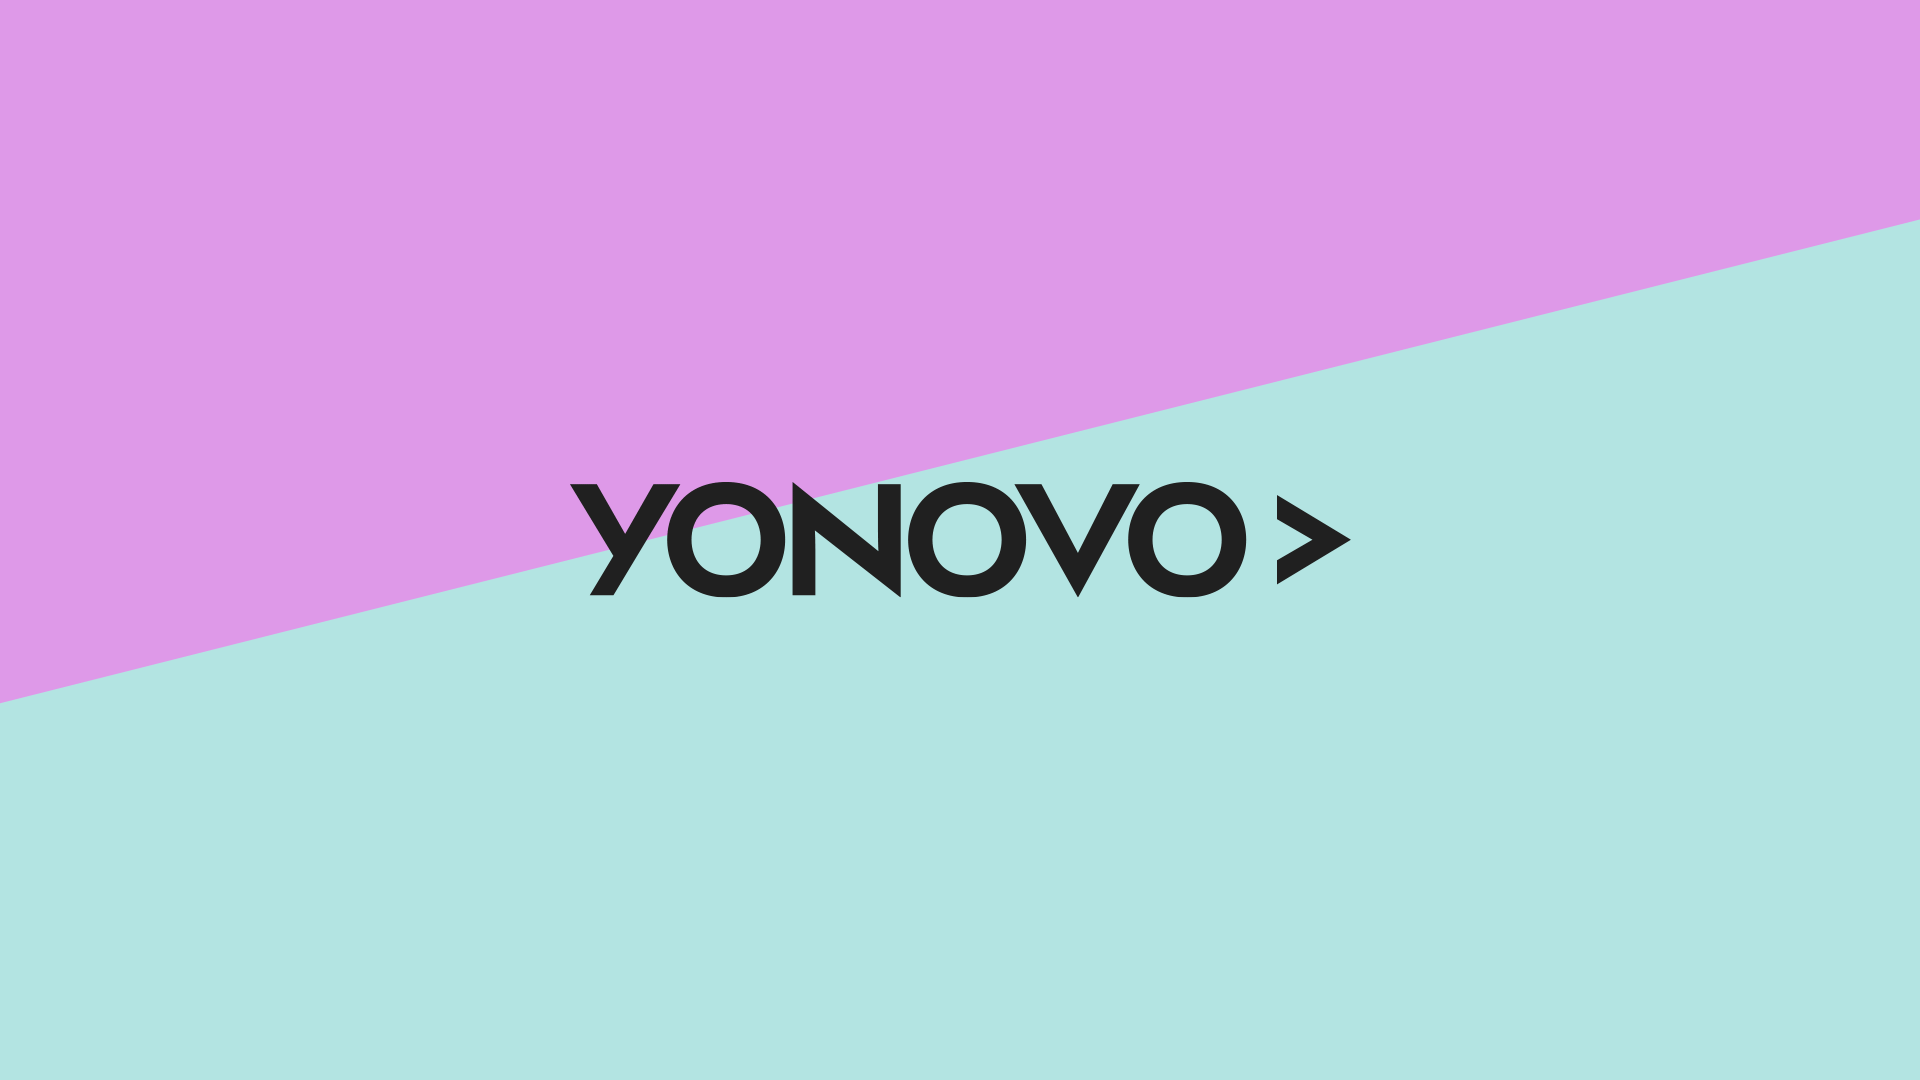 YONOVO image